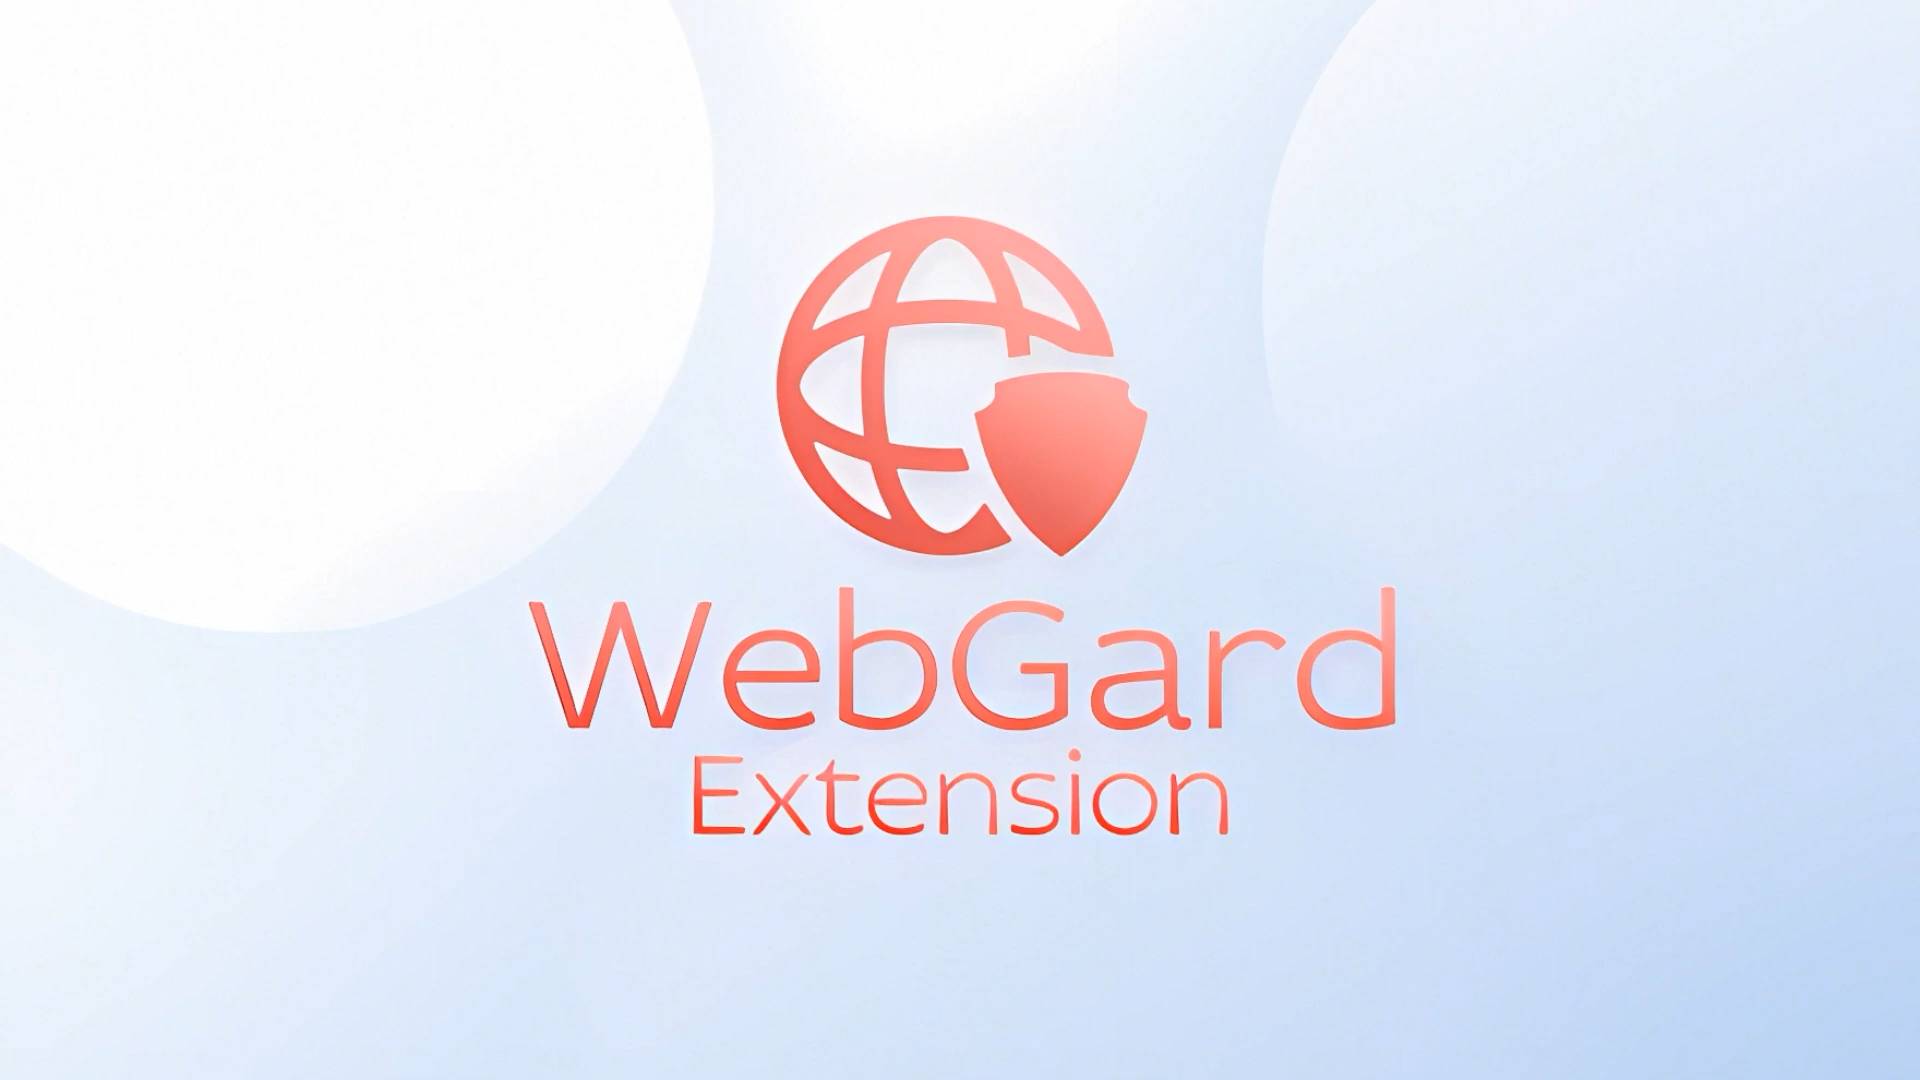 WebGard Extension